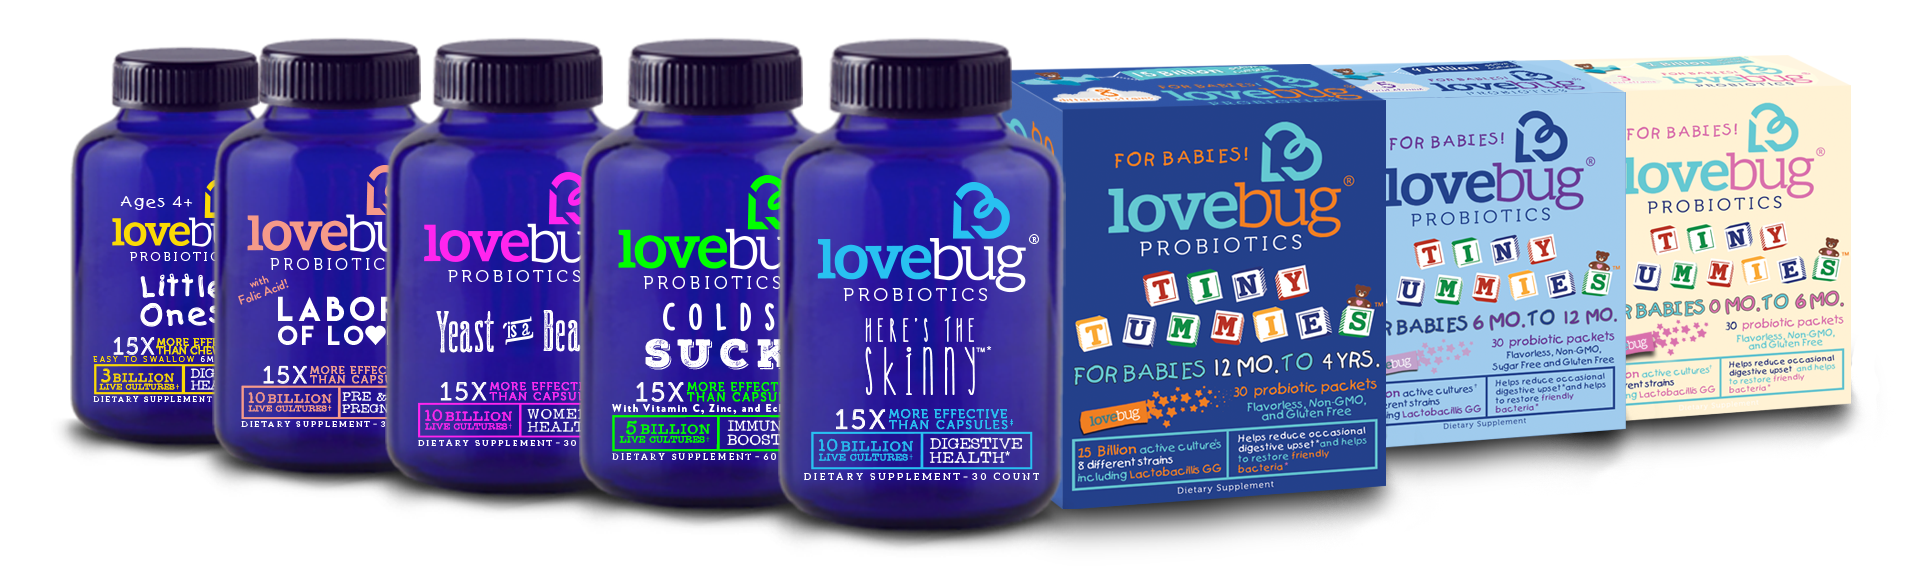 LoveBug Product Family